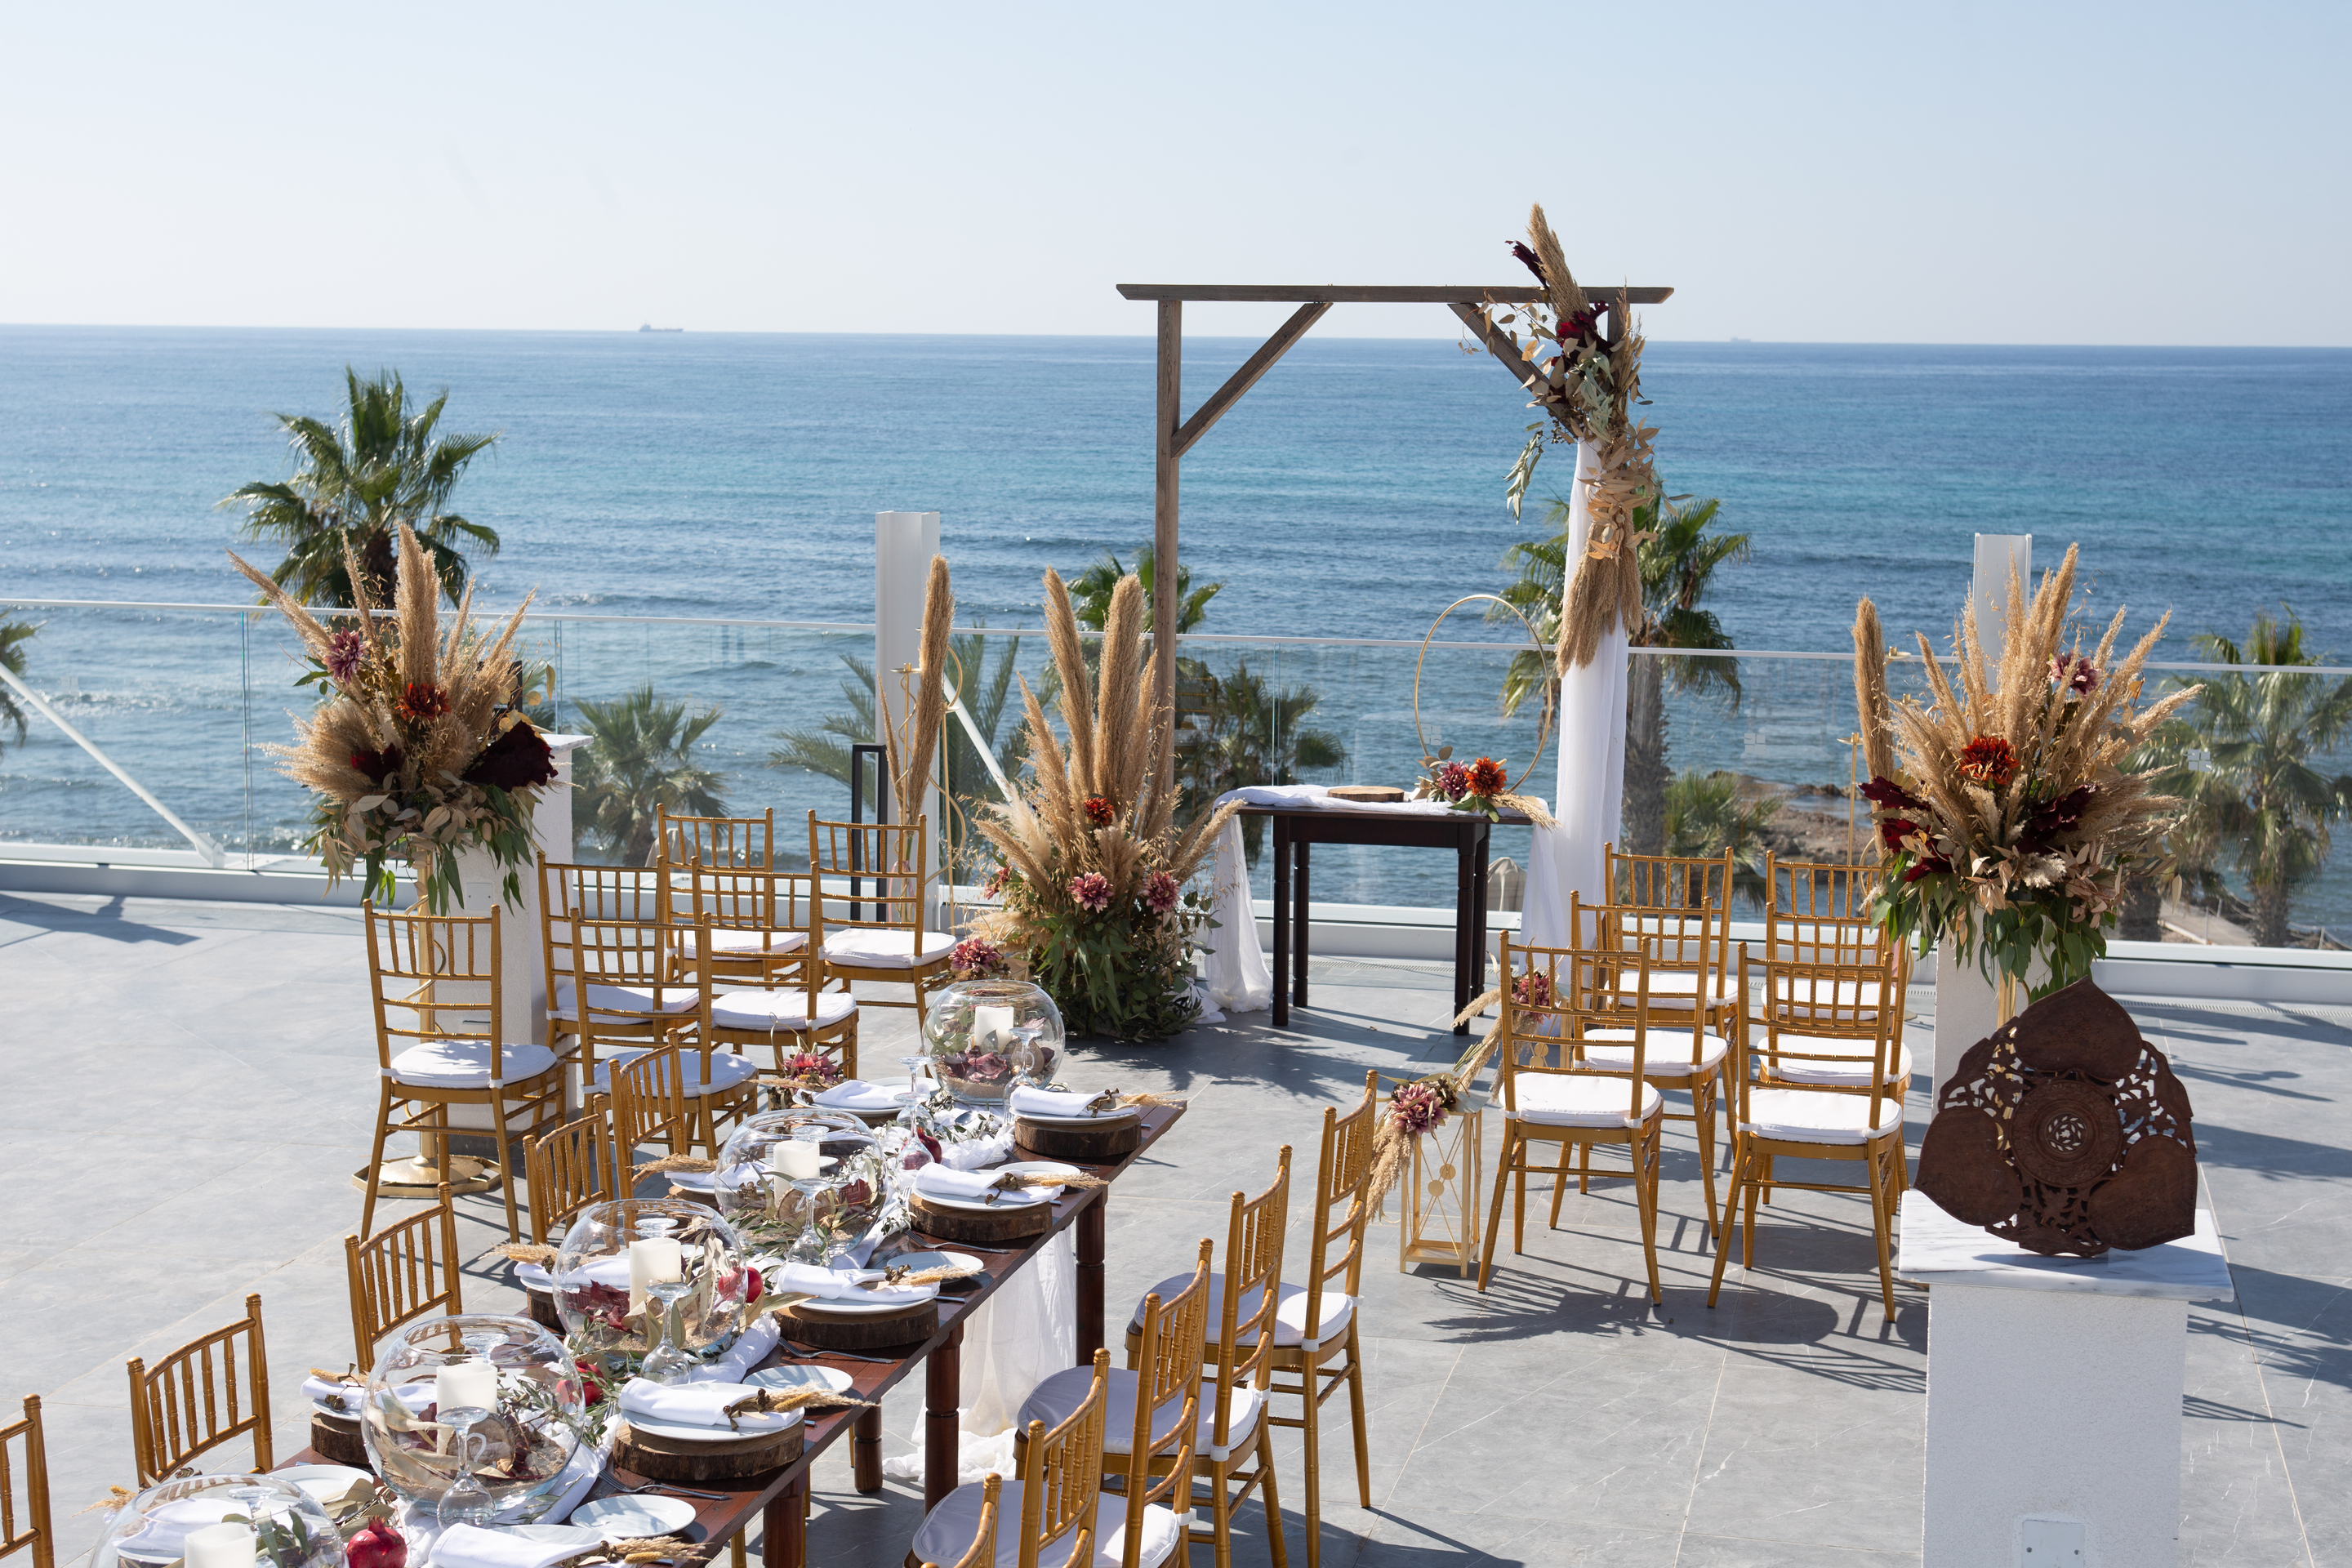 Book your wedding day in Kefalos Beach Village